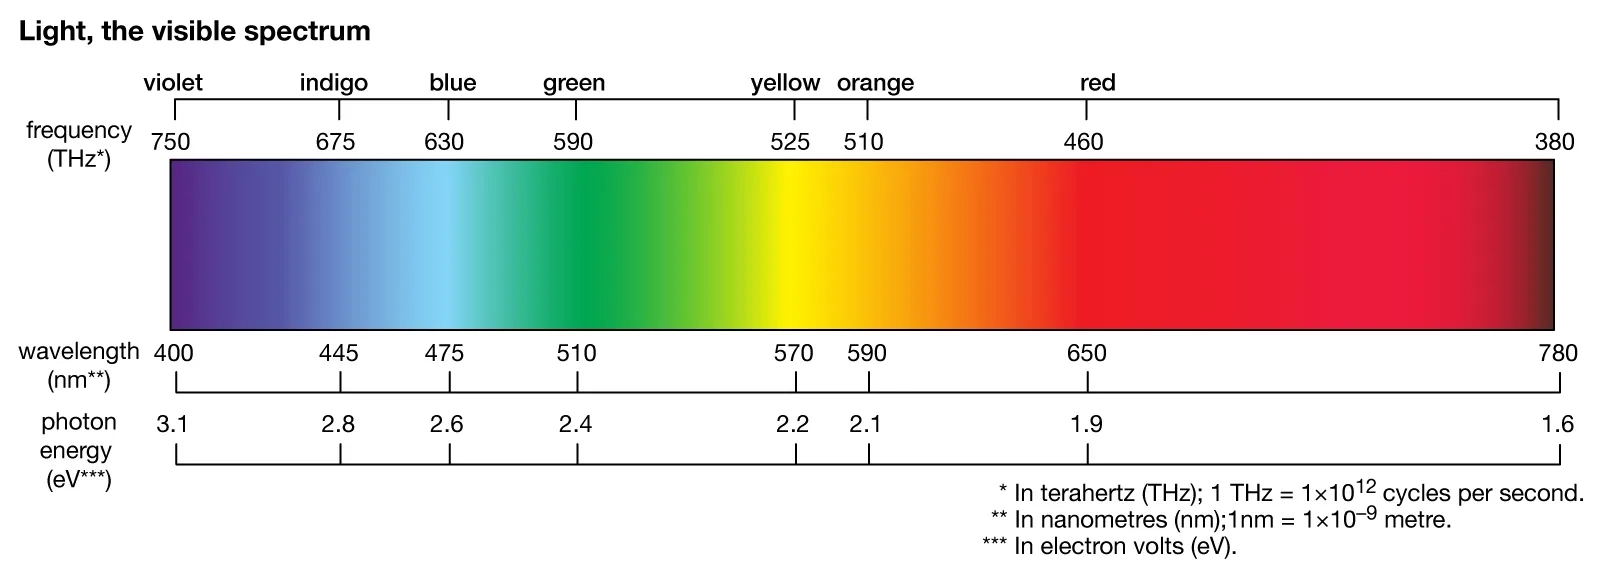 LED indicator light spectrum-wavelengths